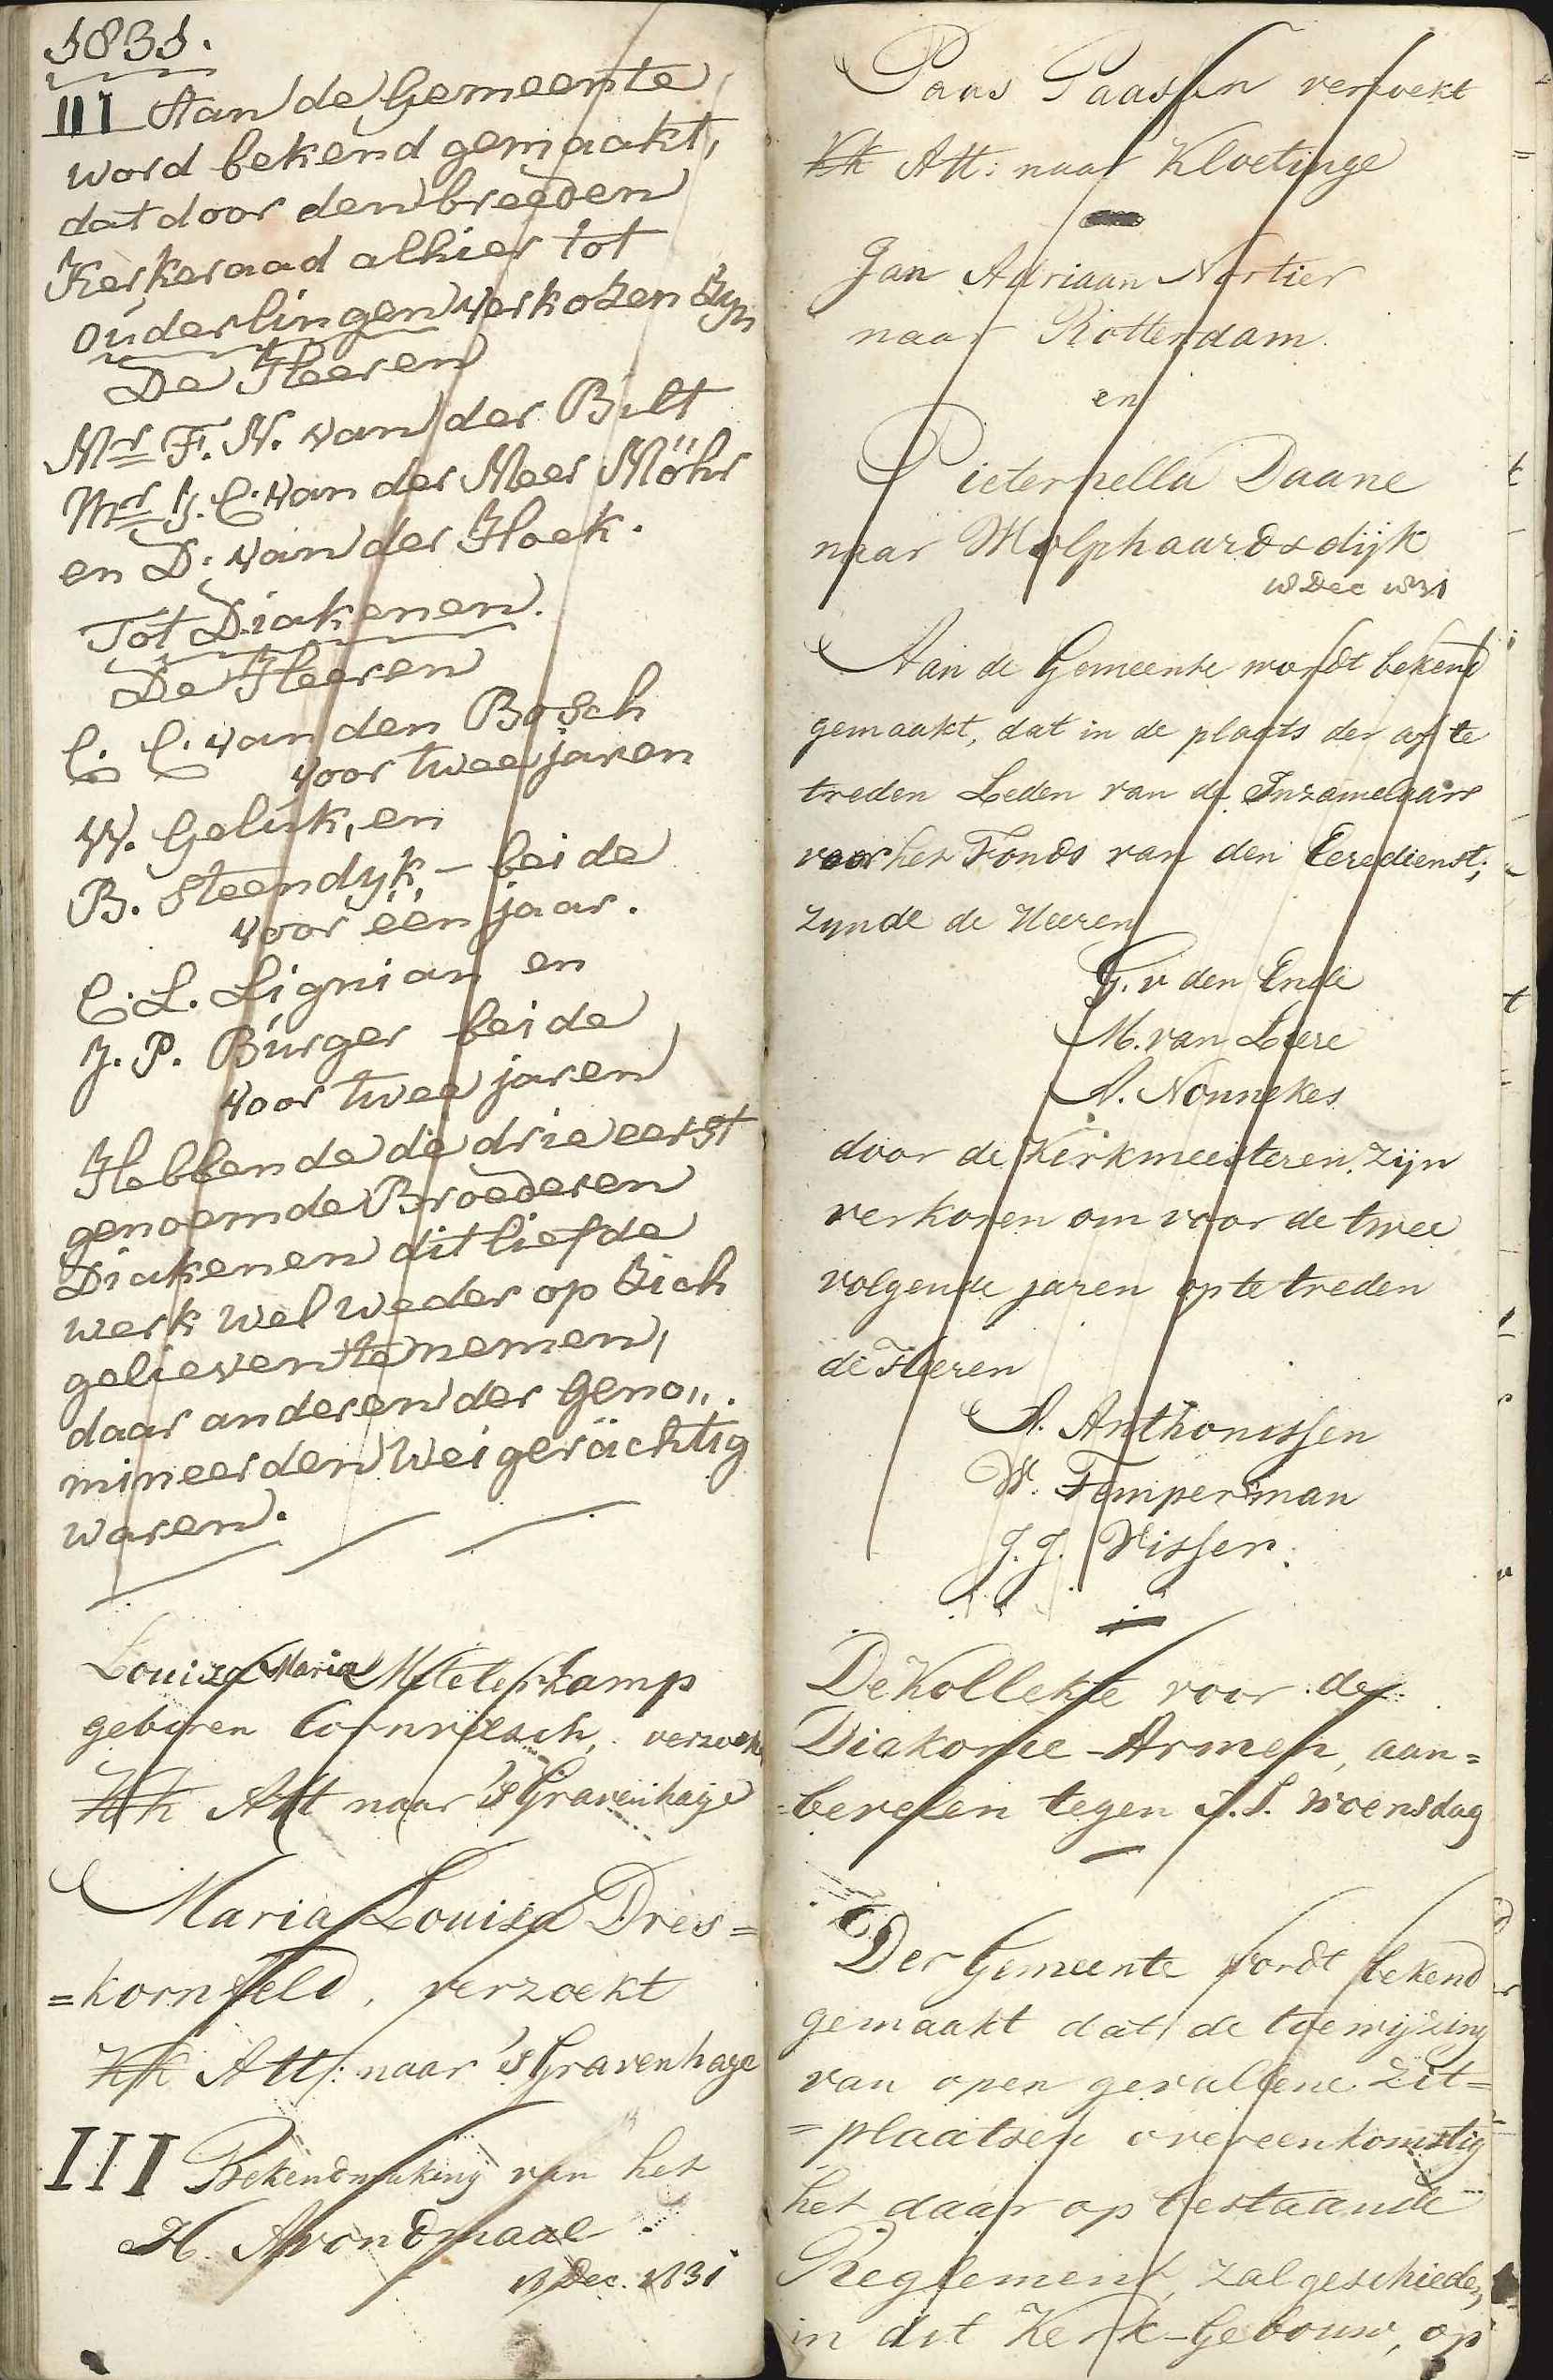 Register met collecte-opbrengsten, 1832. GAG.Arch.herv.kerk, inv.nr. 327.